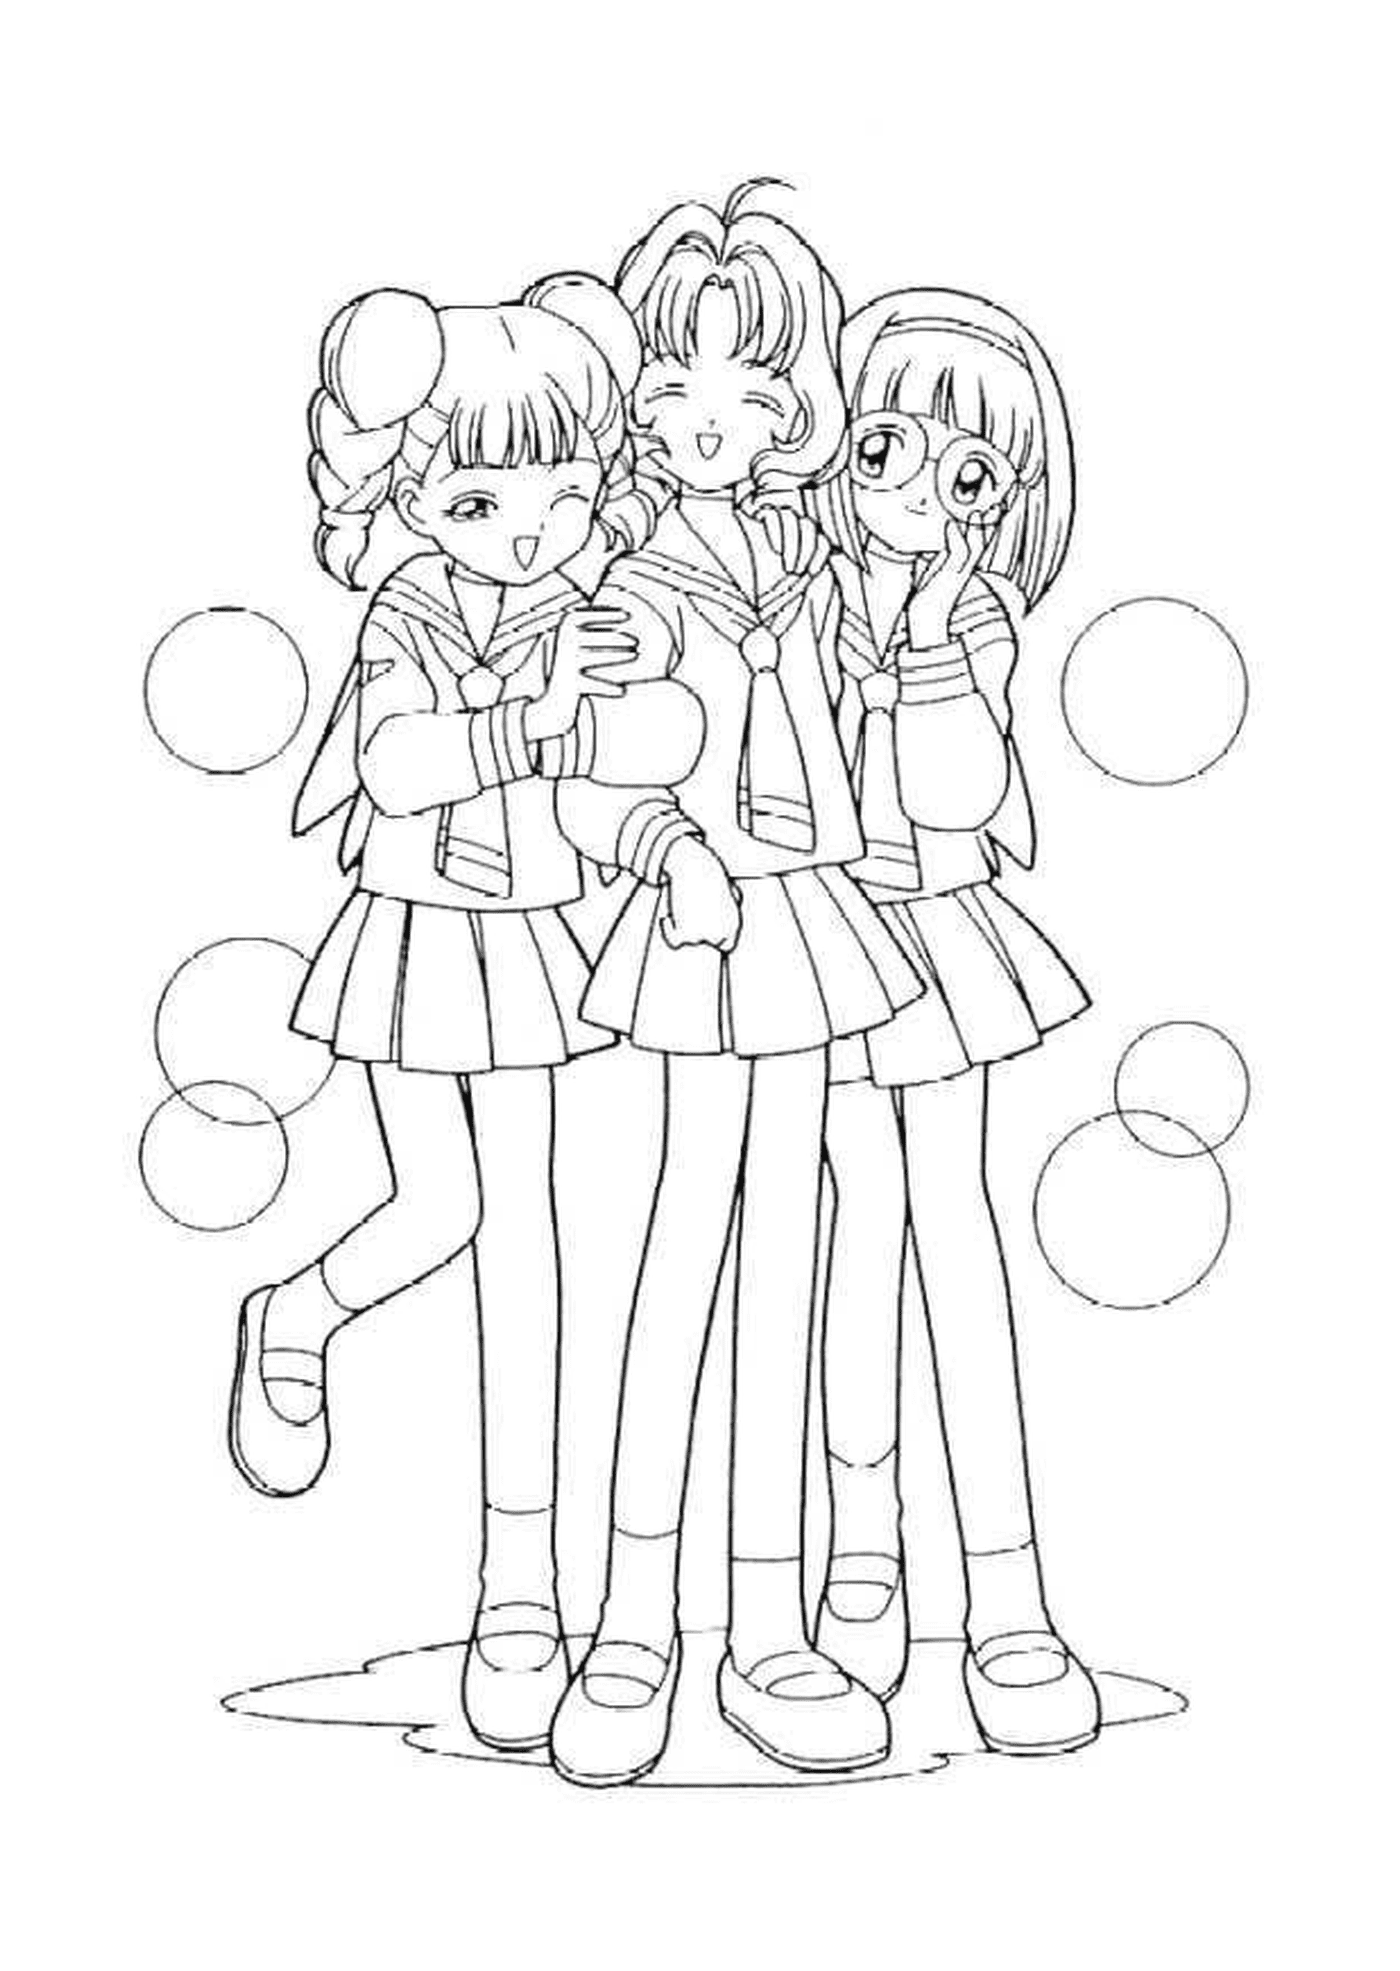  Un grupo de tres chicas de pie lado a lado 